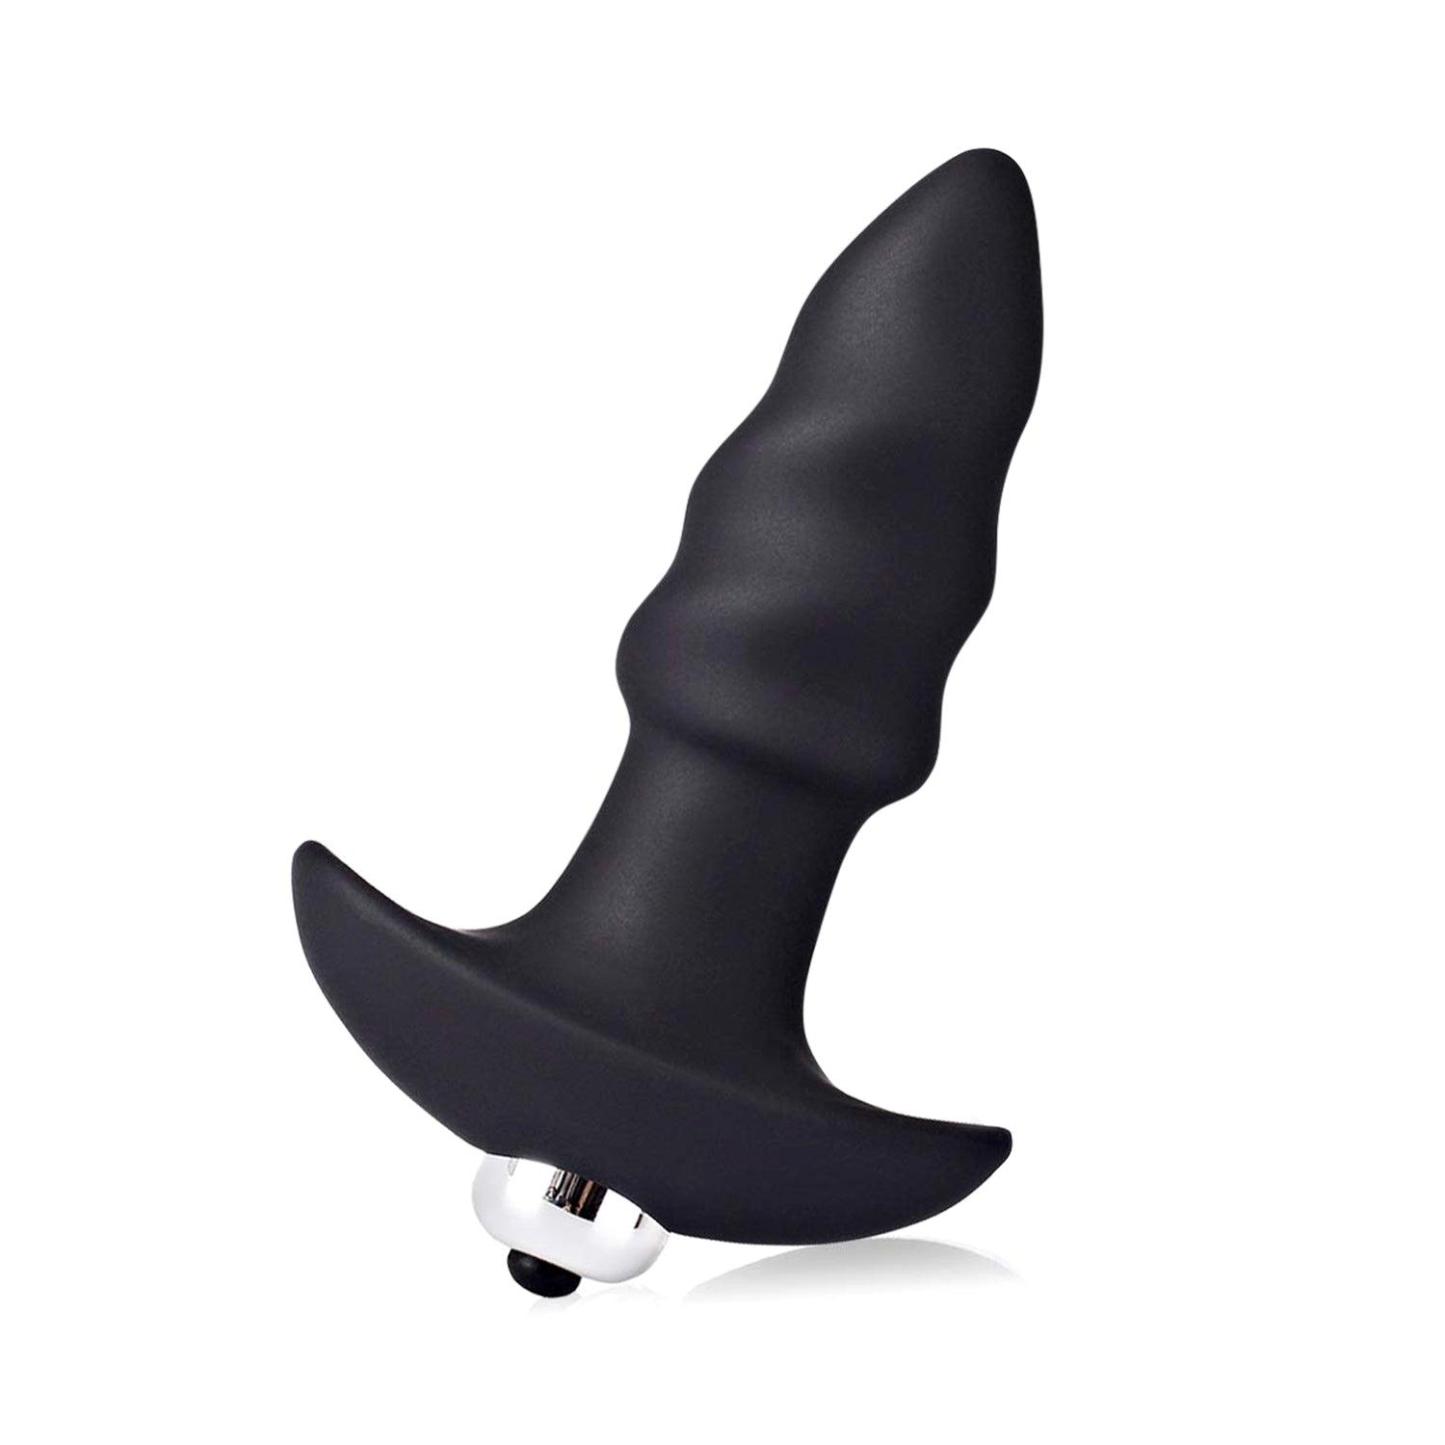 Corkscrew Anal Sex Toy Vibrating Butt Plug - Explore Sensual Twists-BestGSpot